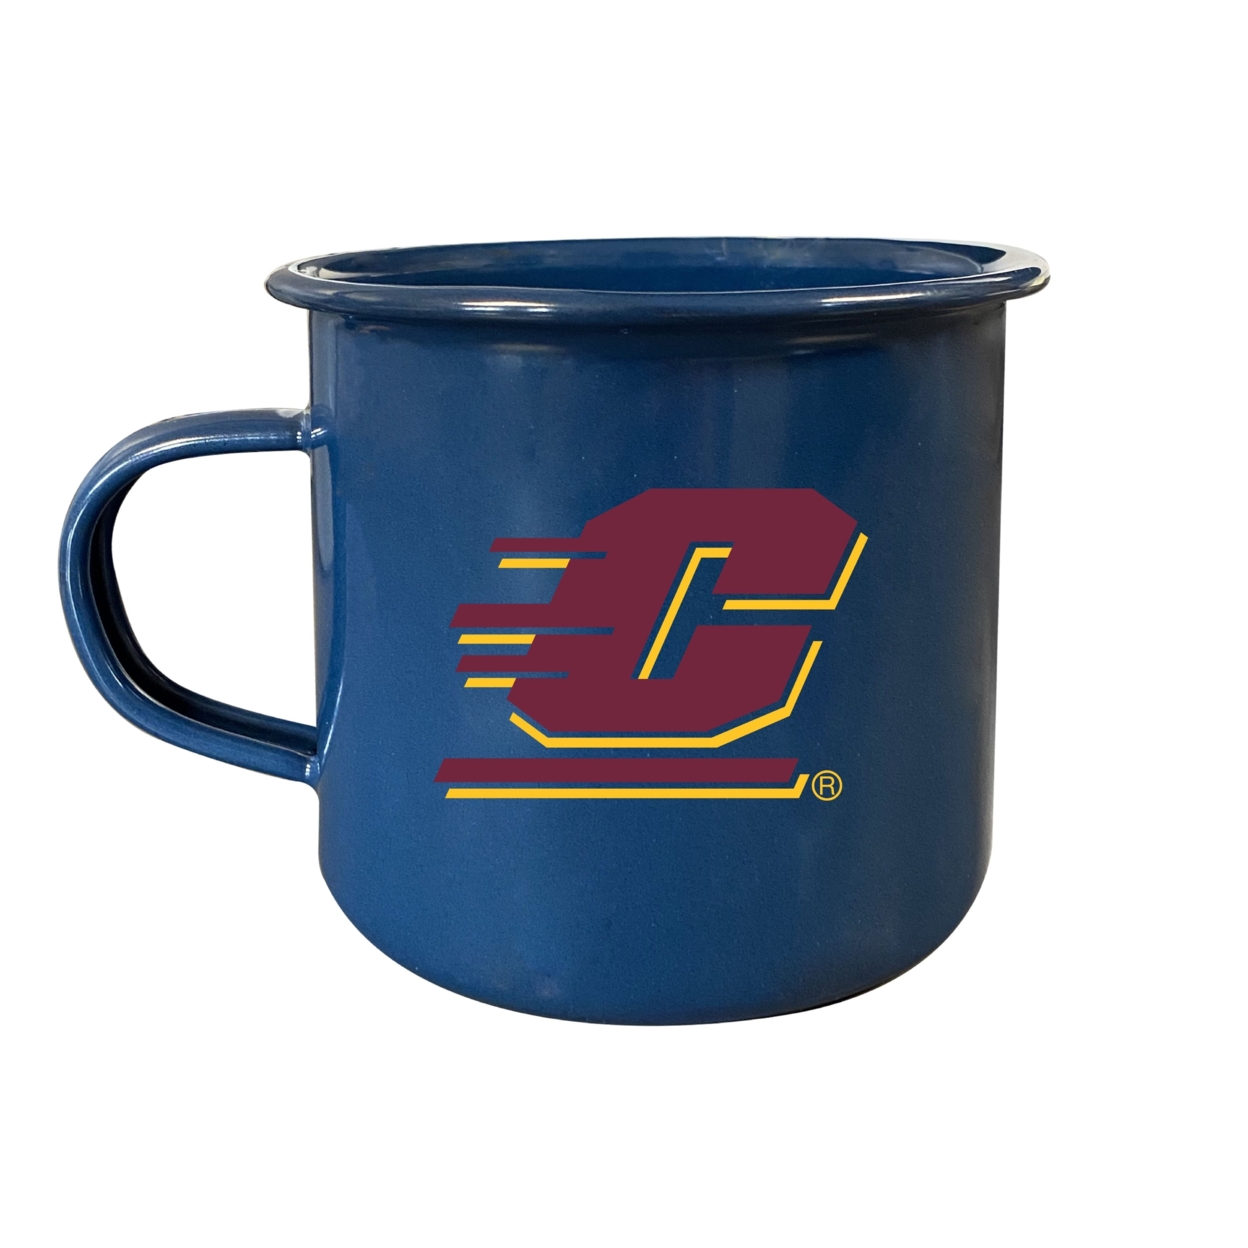 Central Michigan University Tin Camper Coffee Mug - Choose Your Color - Navy